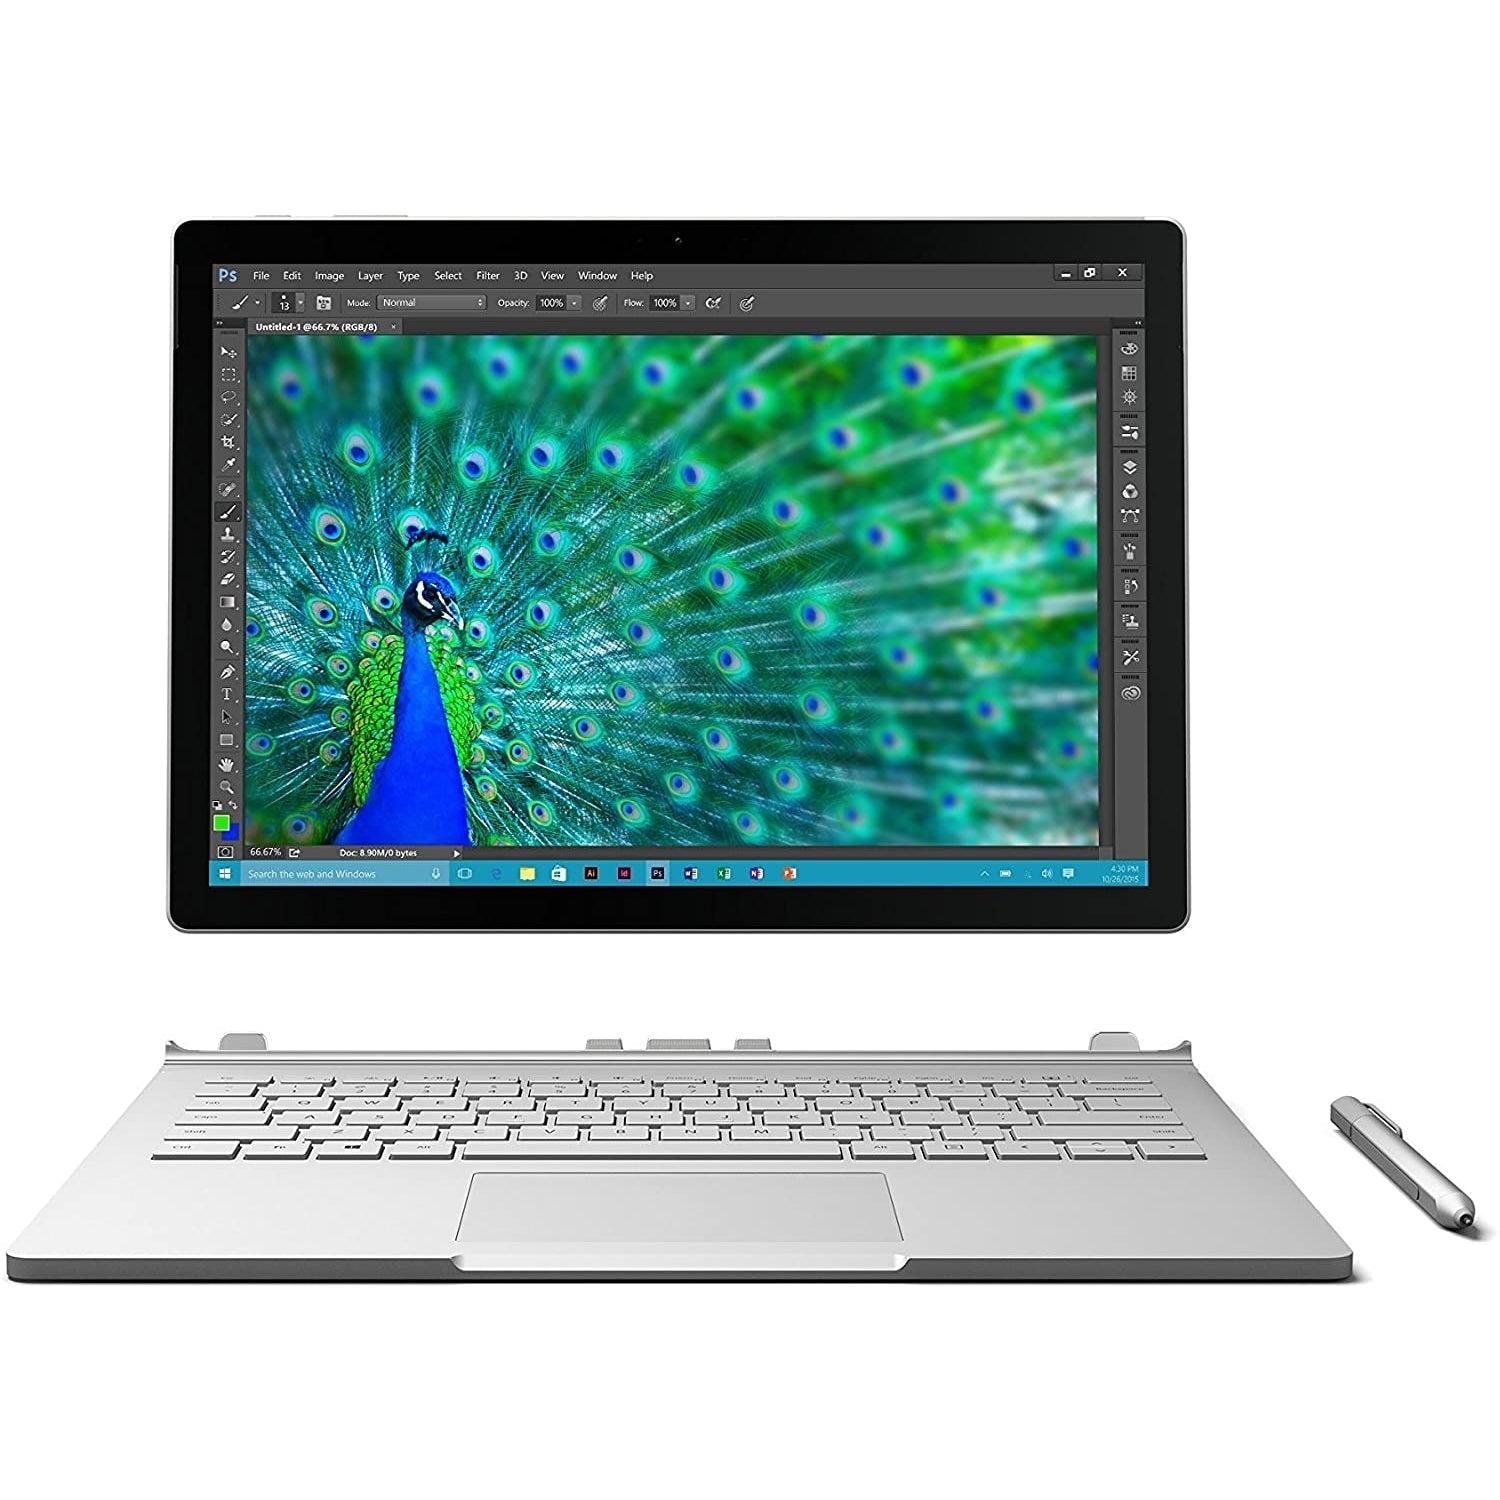 Microsoft Surface Book 13.5", Intel Core i5, 8GB RAM, 256GB SSD, Silver